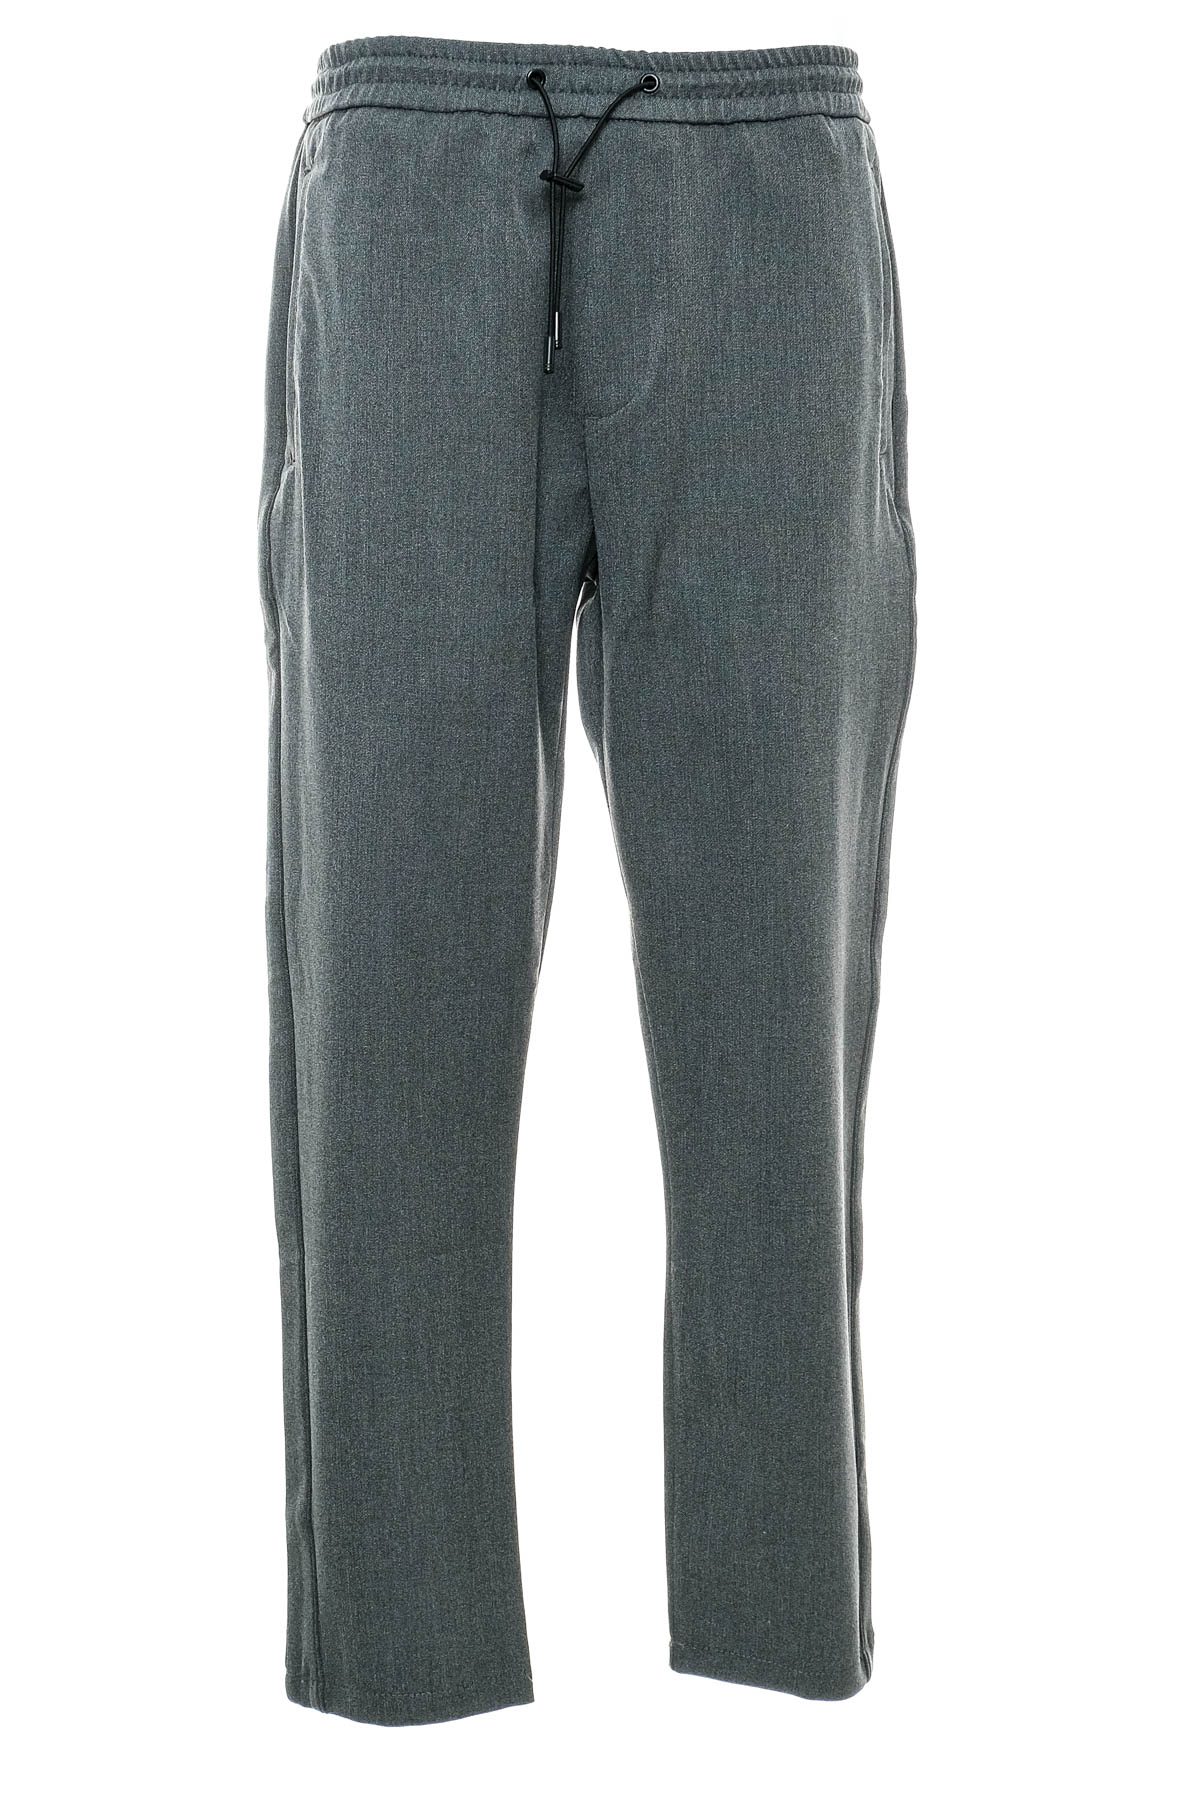 Pantalon pentru bărbați - ZARA - 0